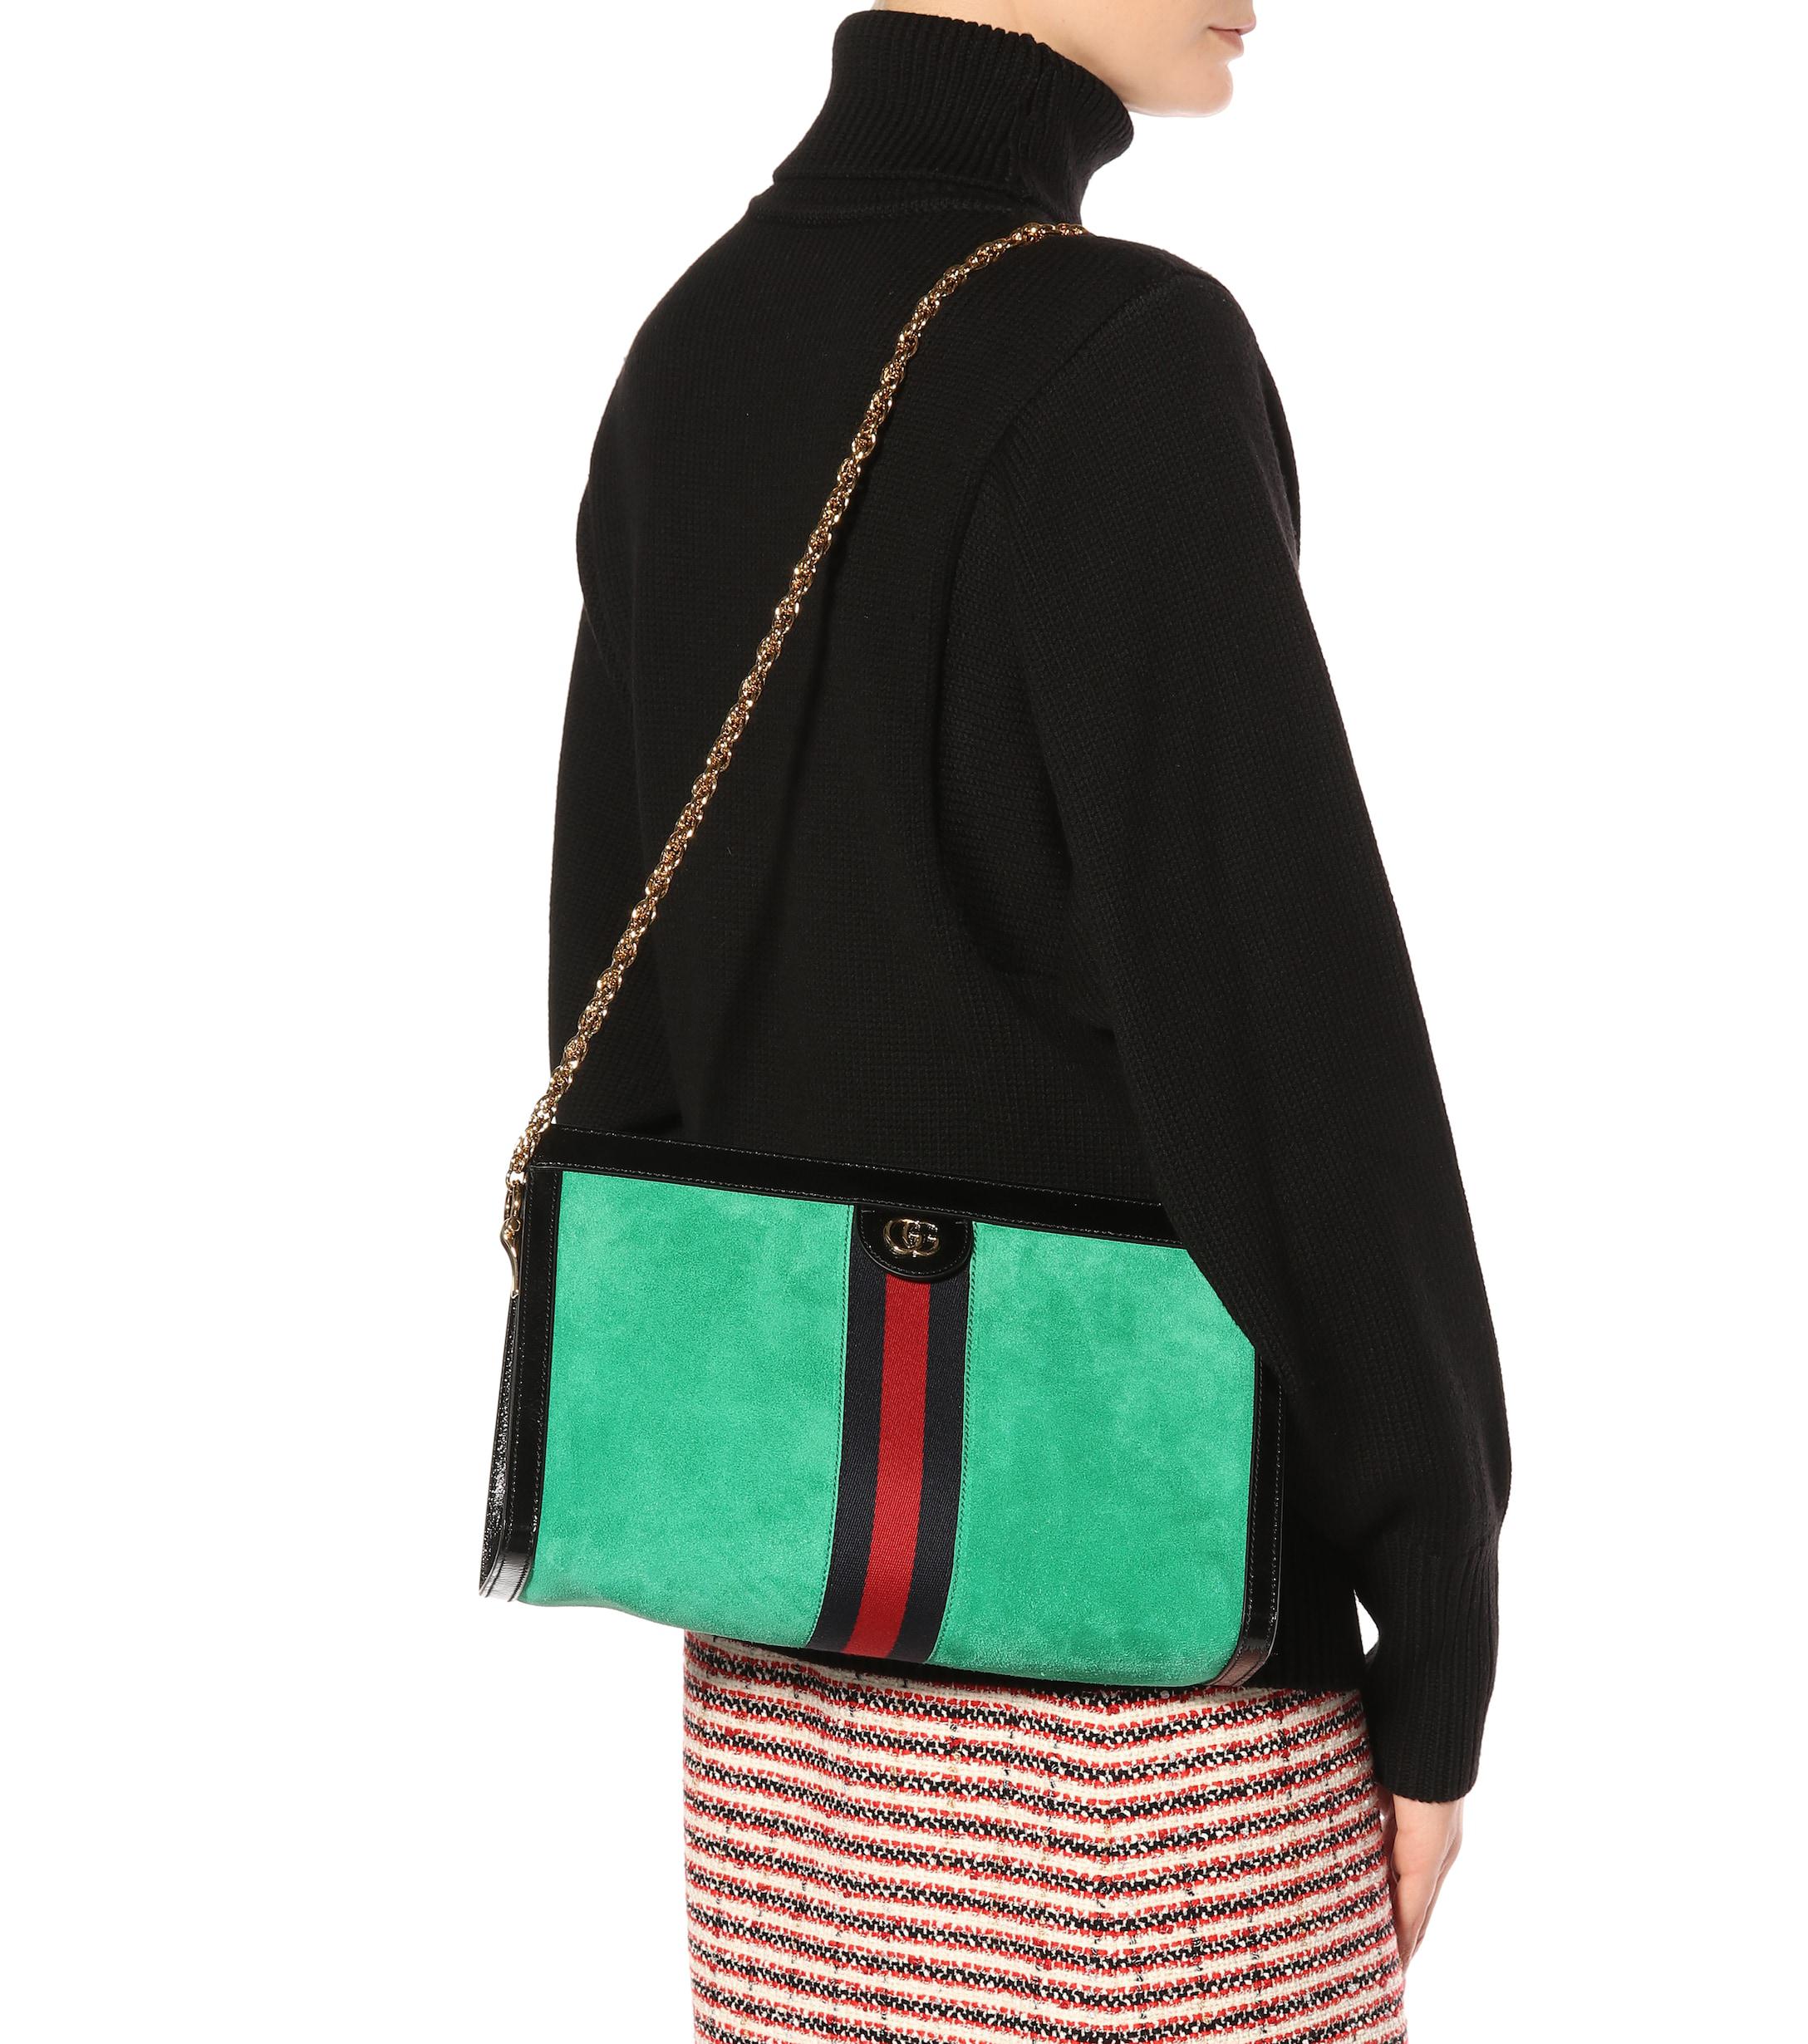 Gucci Ophidia Medium Suede Shoulder Bag in Green - Lyst